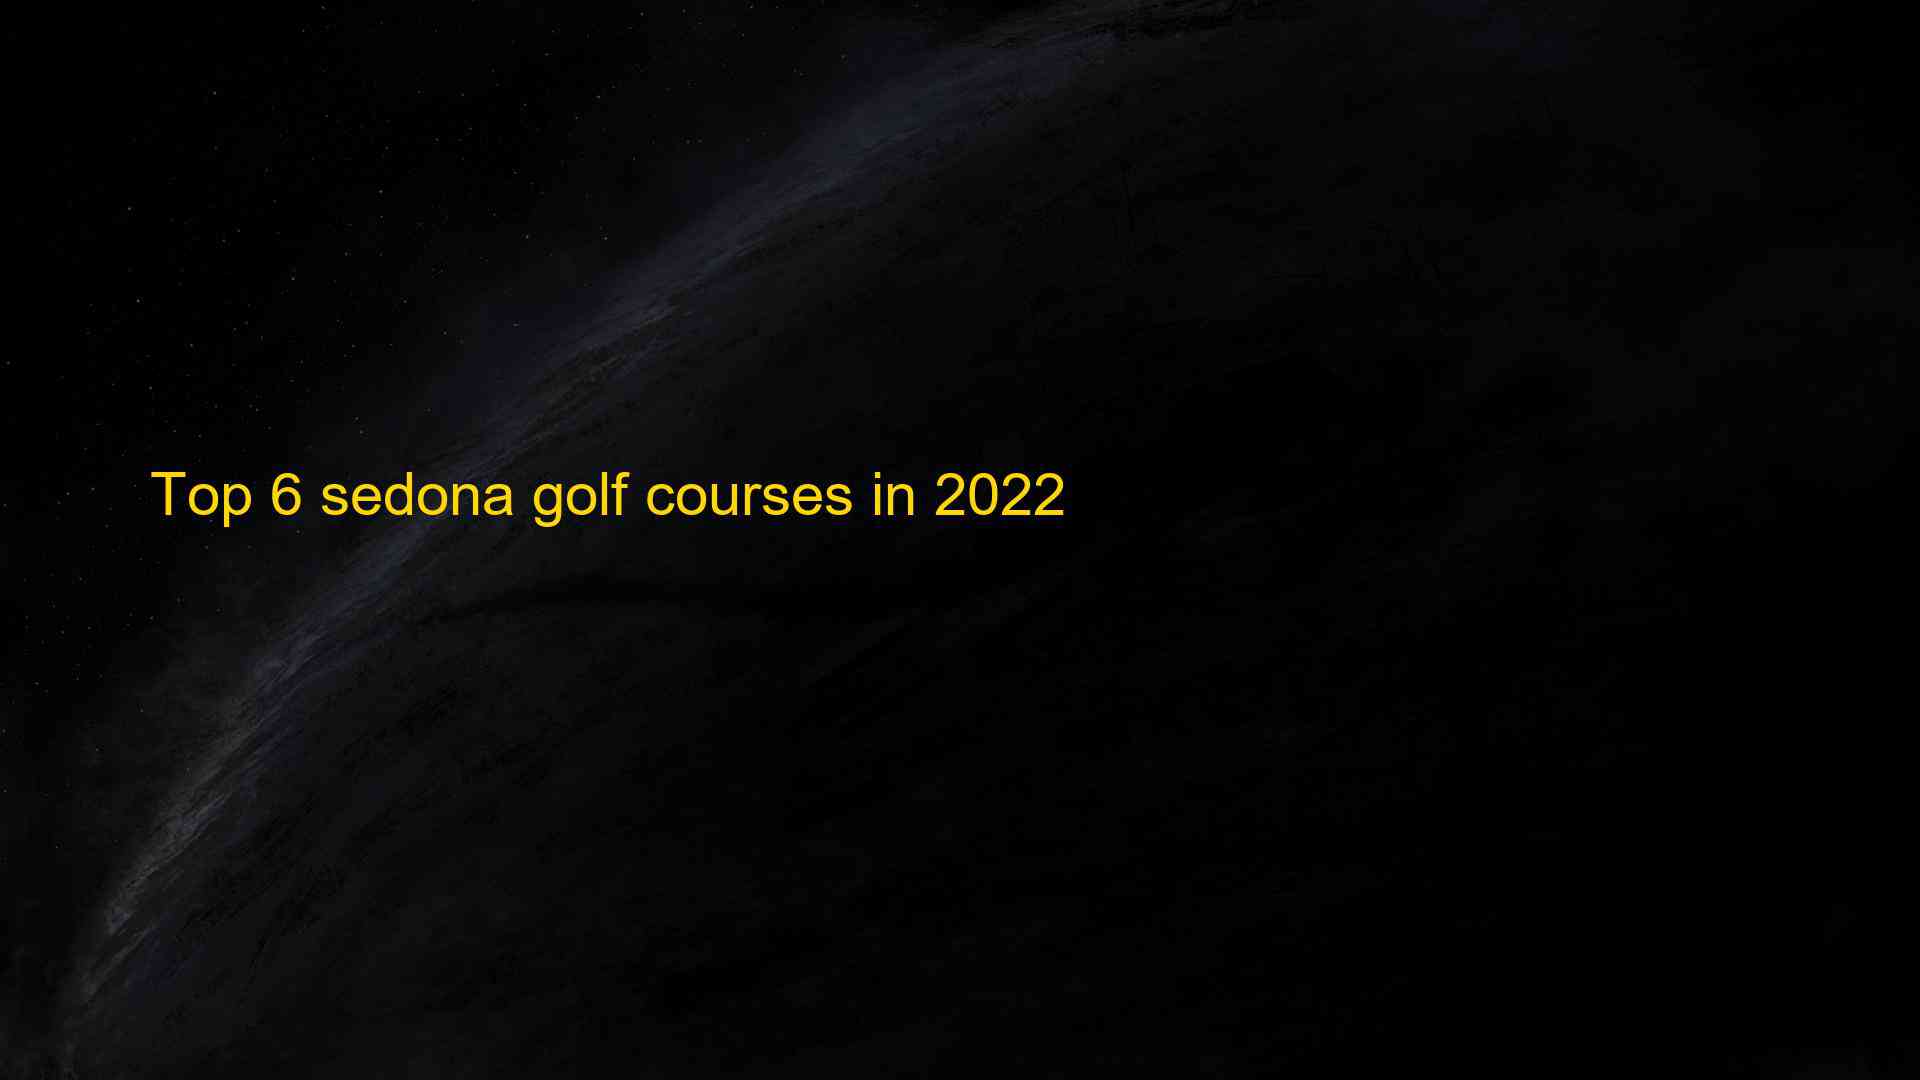 Top 6 sedona golf courses in 2022 1660713020